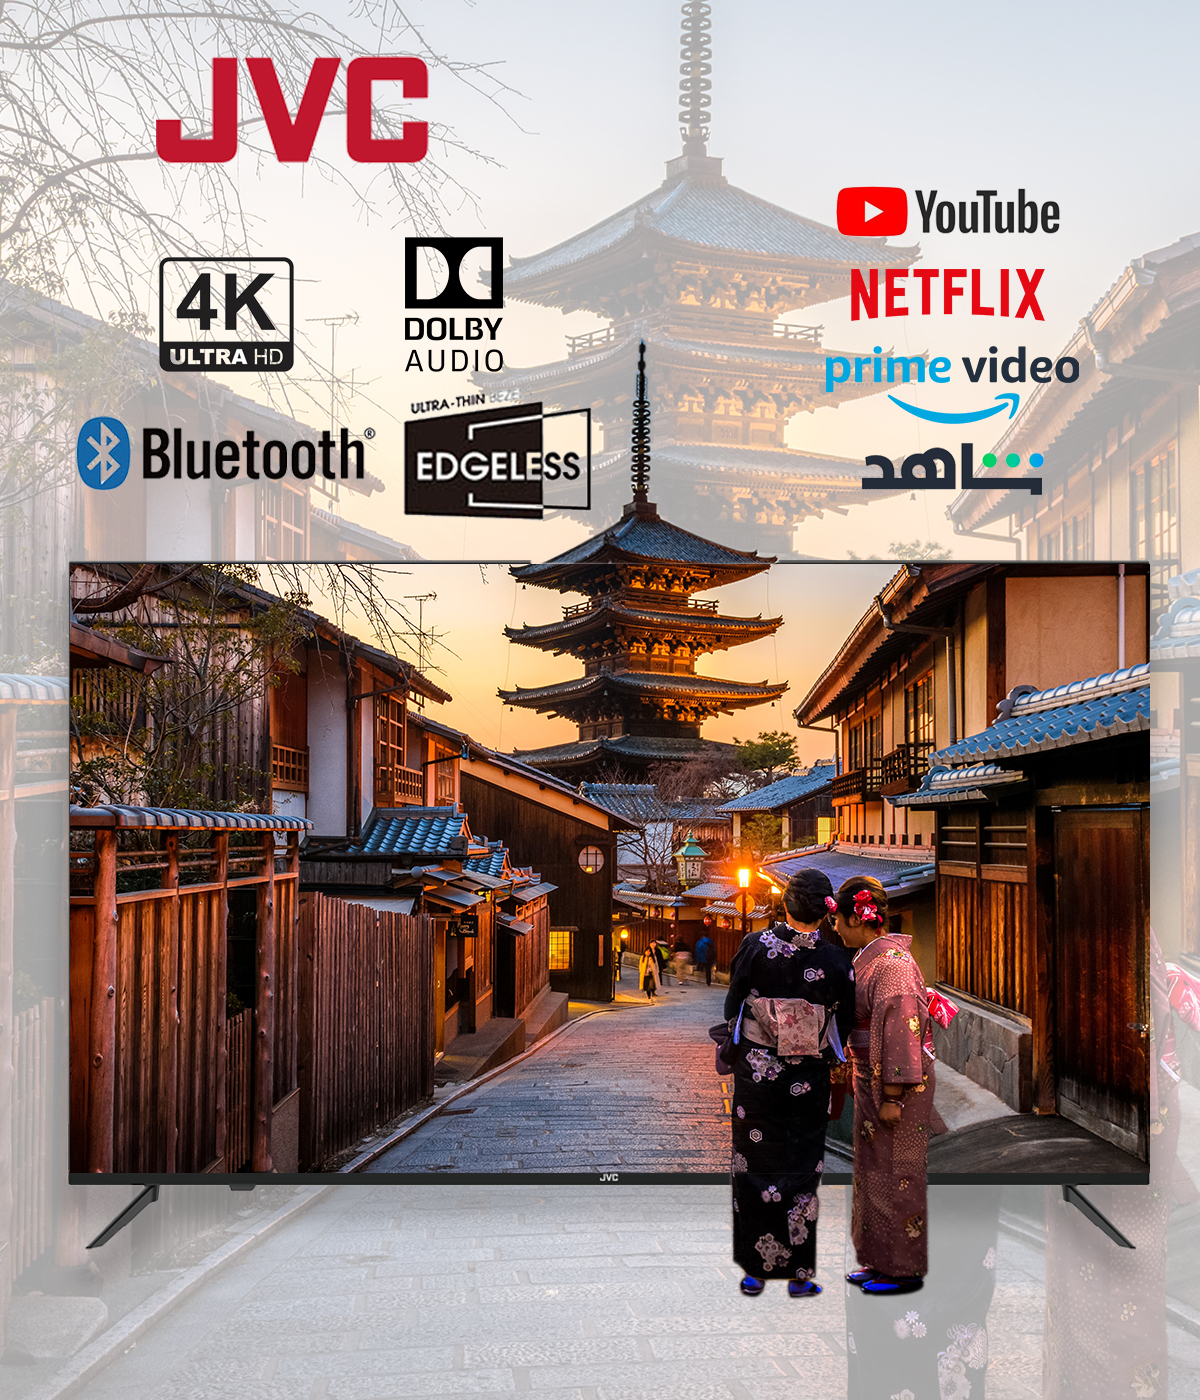 JVC 70 Inch, 4K UHD, Smart TV, LT-70N7105V (Edgeless, Powered By VIDAA, Dolby Audio, VIDAA Voice Remote , Bluetooth , DVBT2/S2)